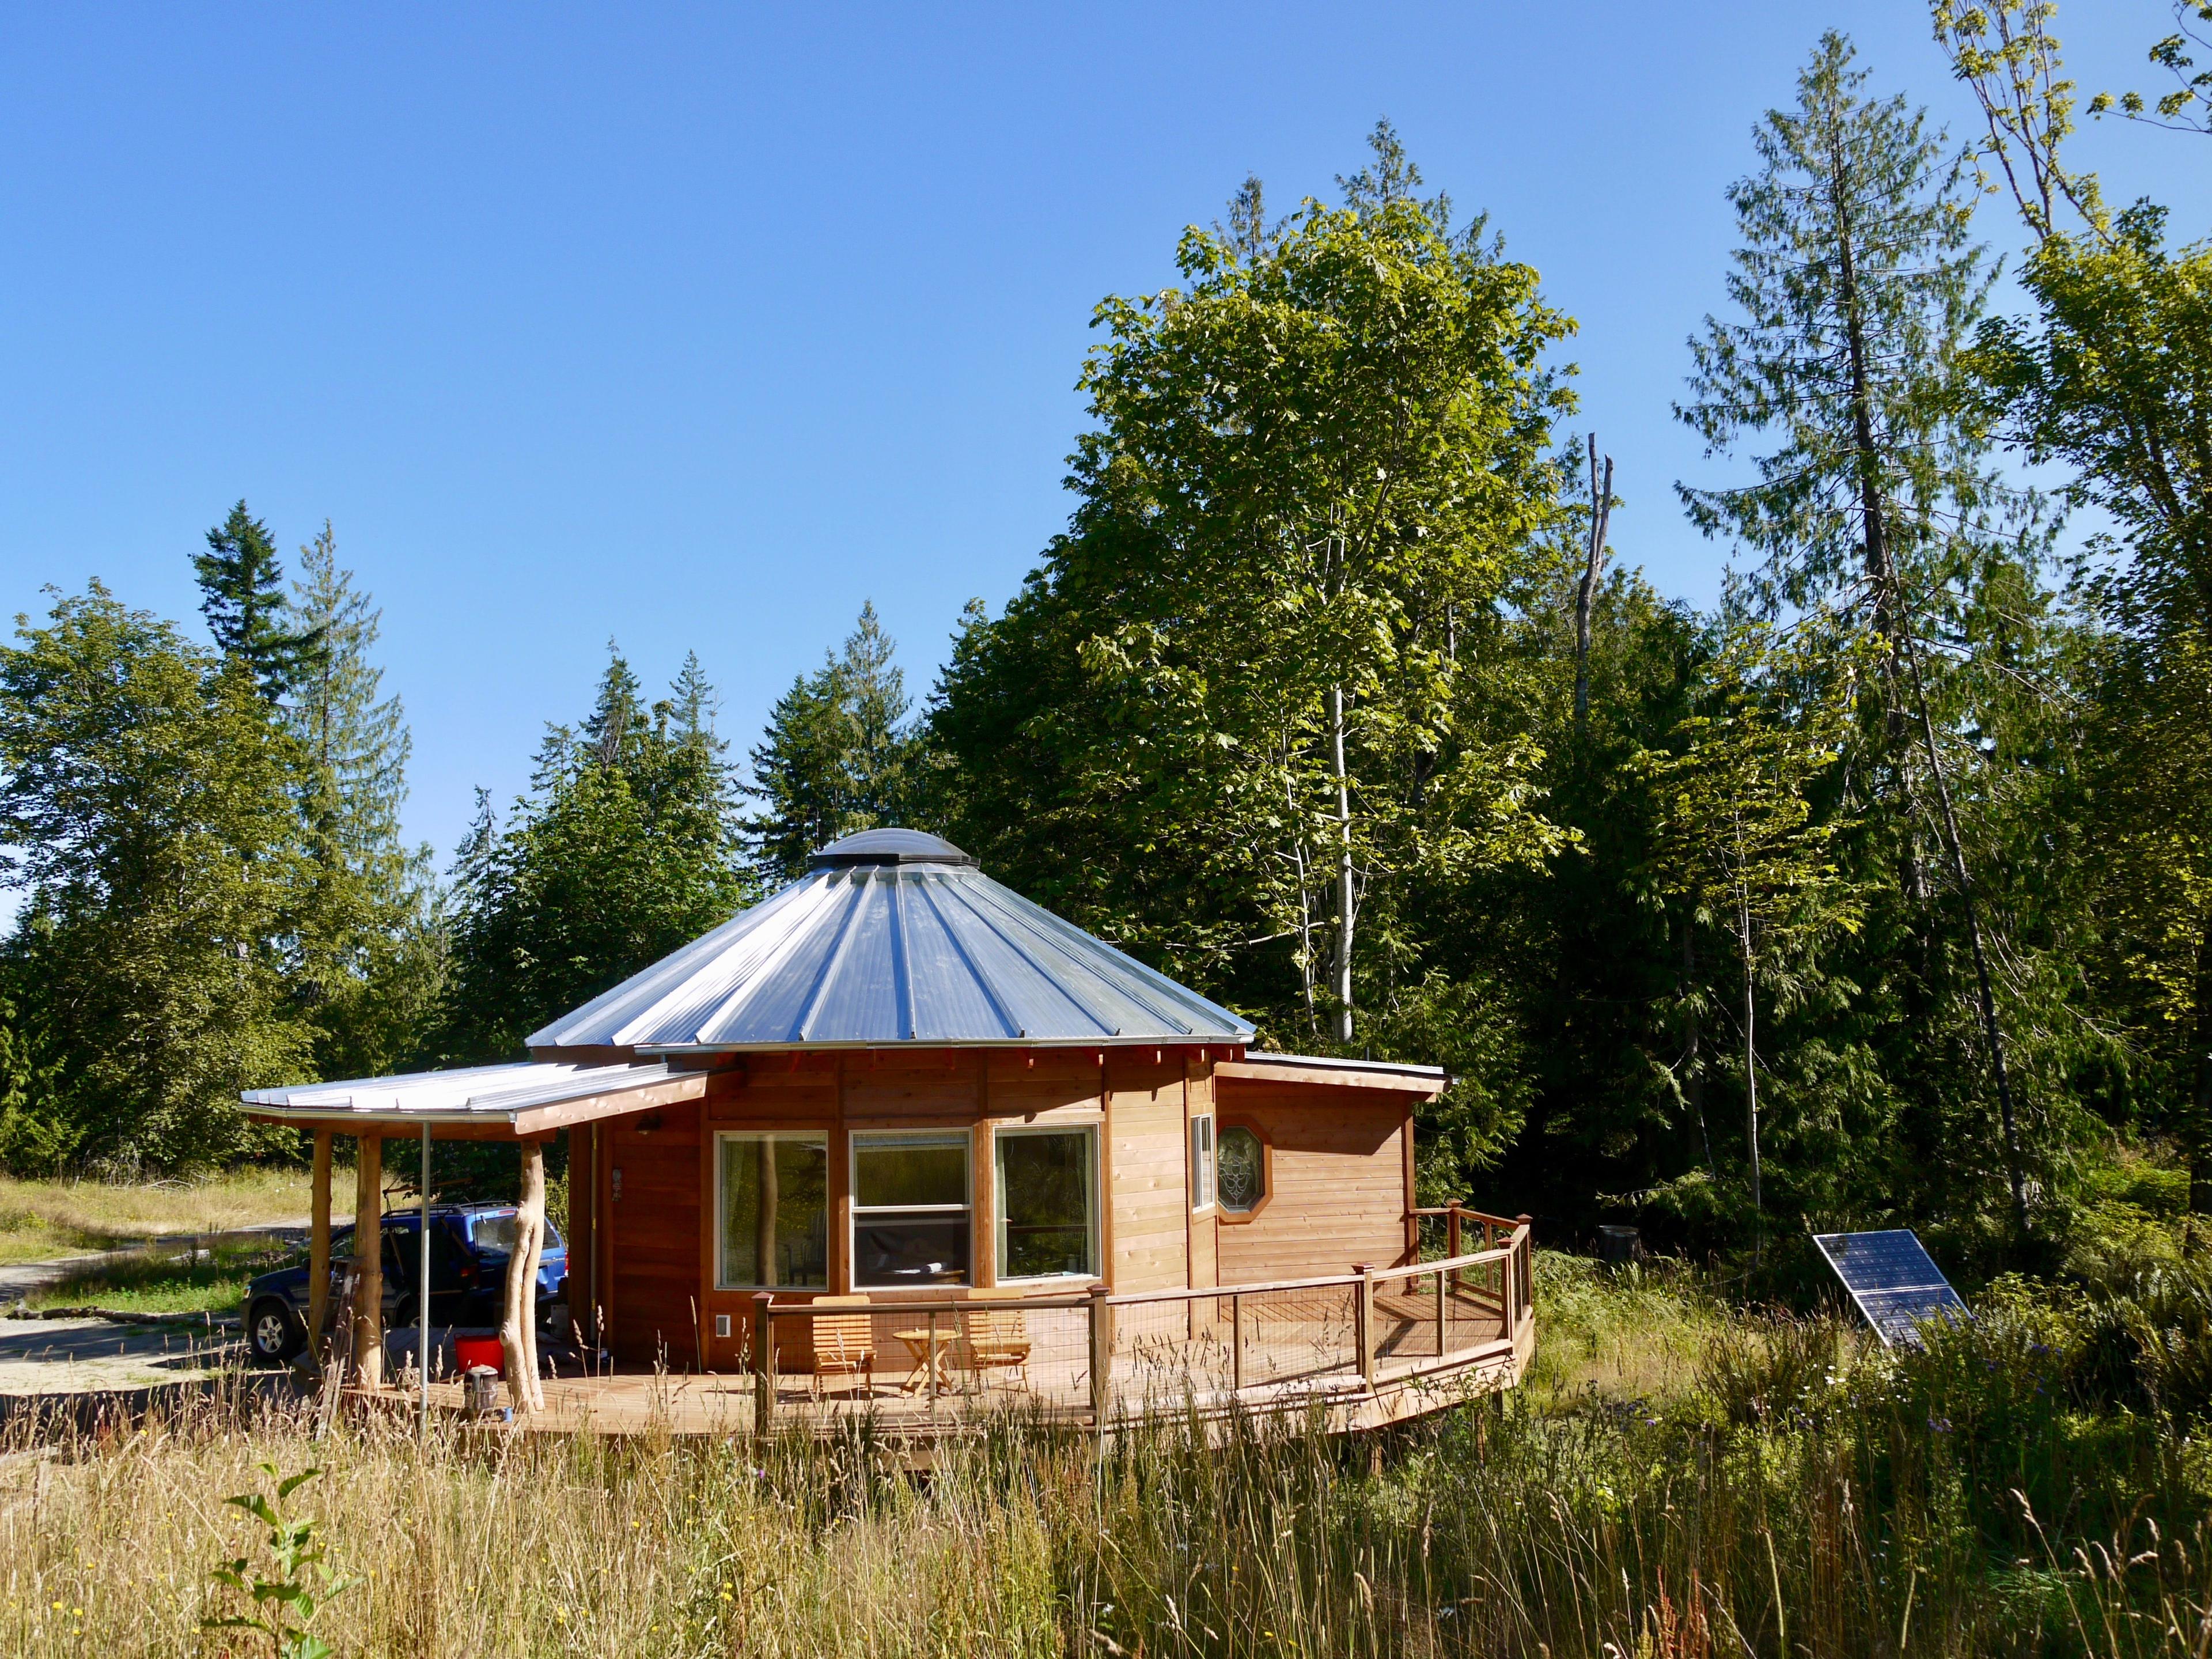 Cute 20 foot wooden yurt on Washington's Olympic Peninsula